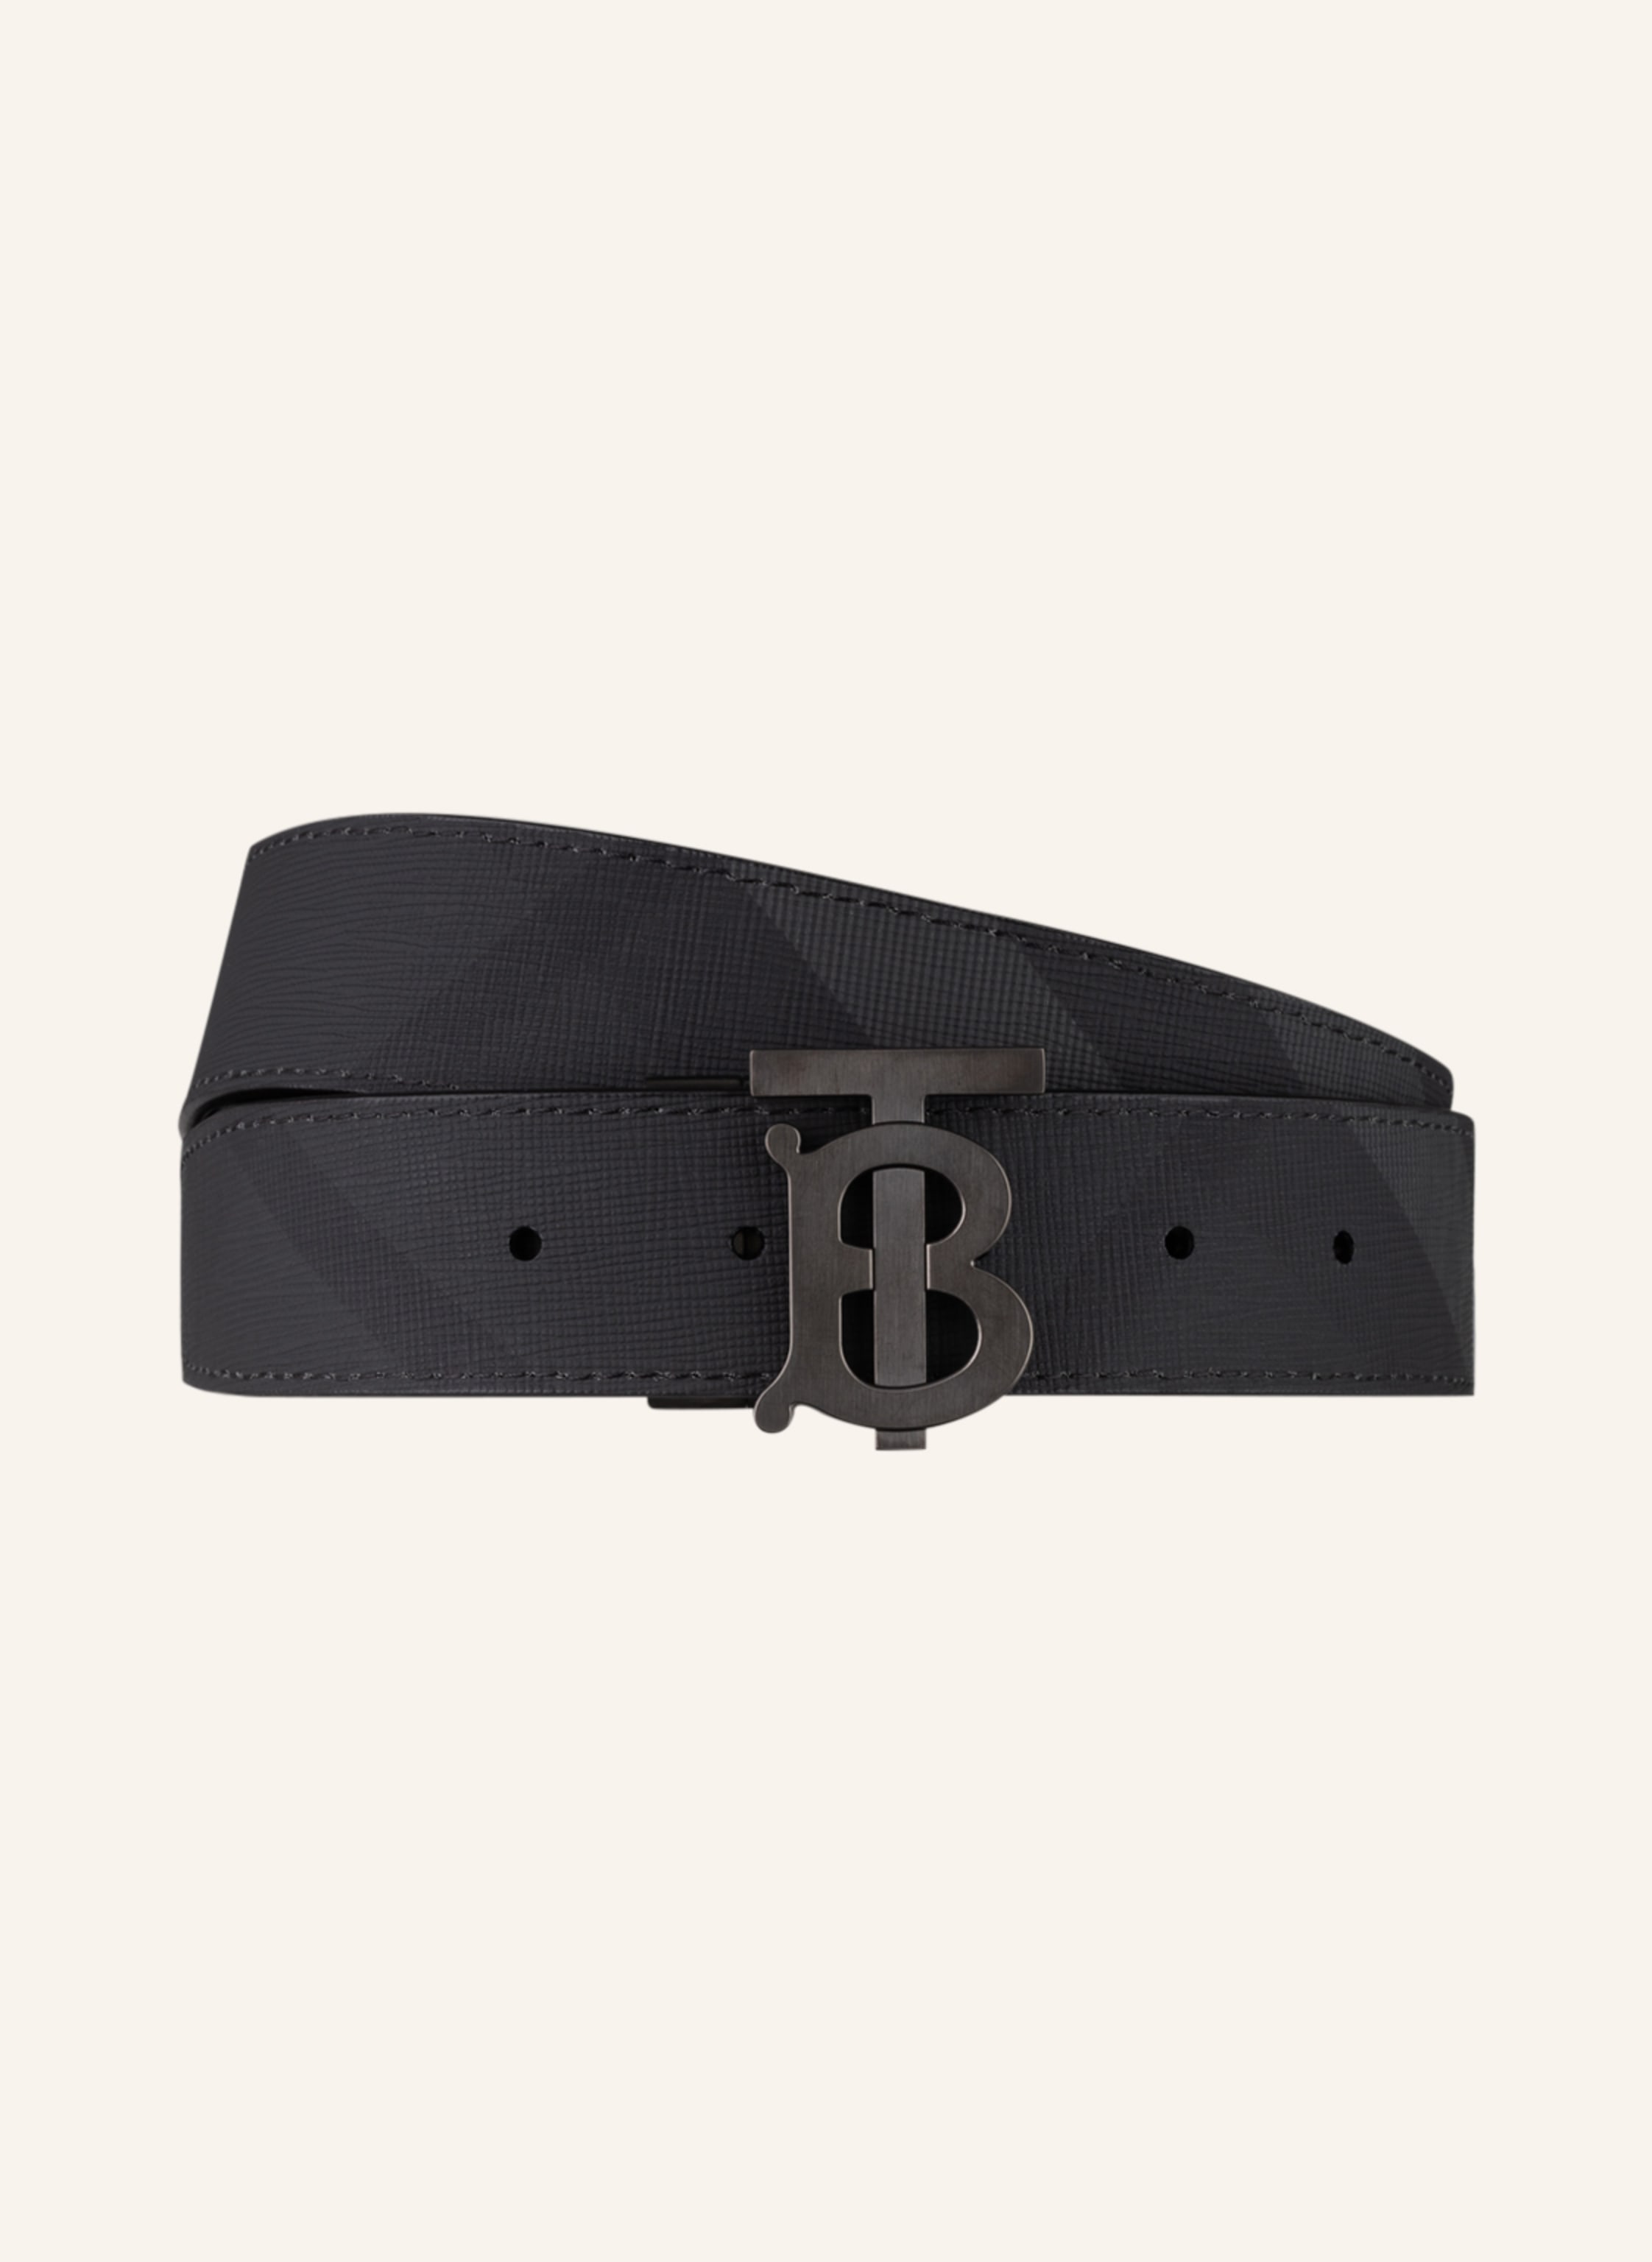 BURBERRY Leather belt LONDON reversible